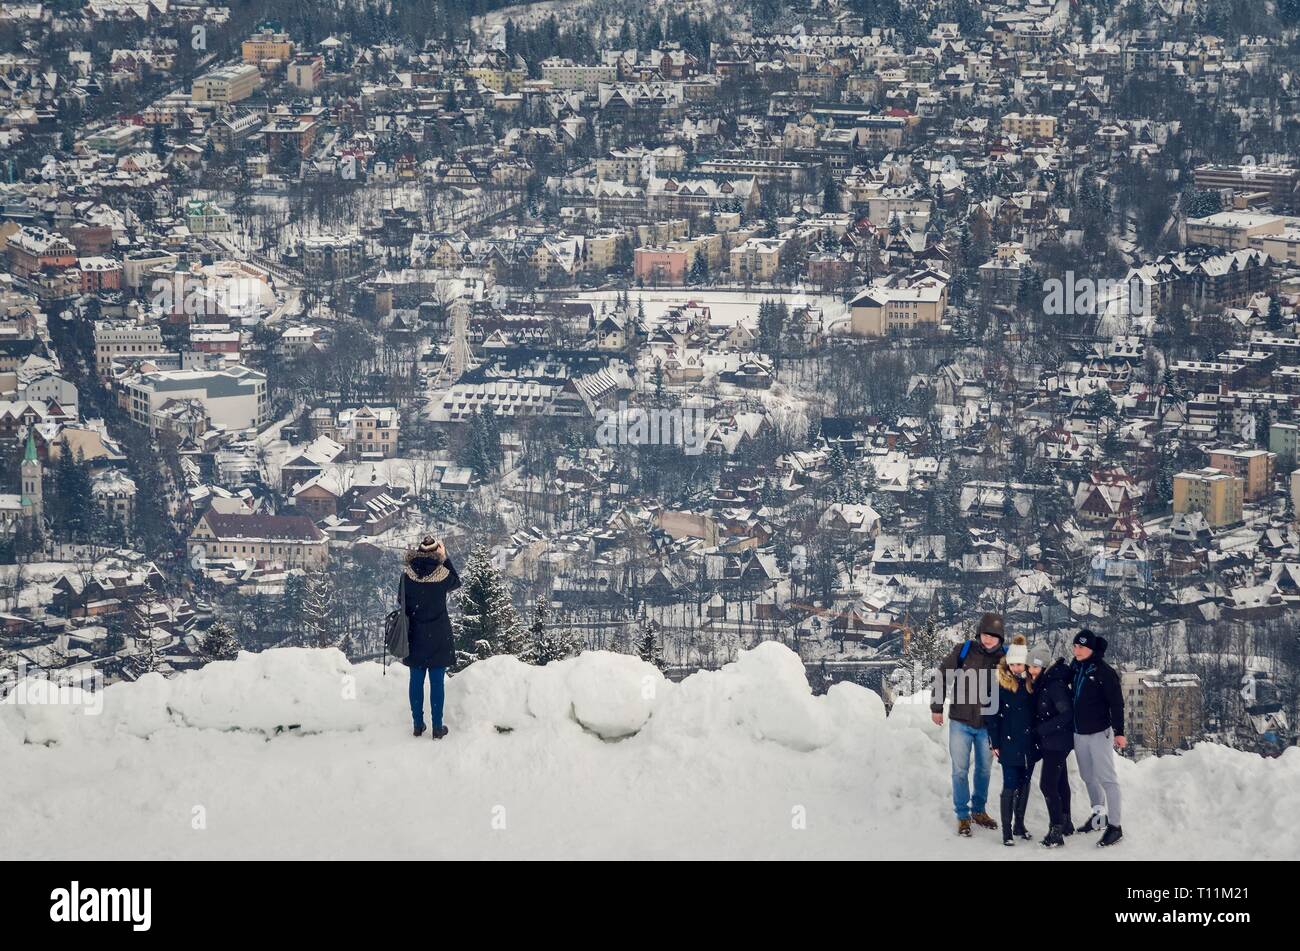 ZAKOPANE, POLAND - DECEMBER 30, 2018: Tourists at the top of the popular Gubalowka peak in Zakopane, Poland. Stock Photo